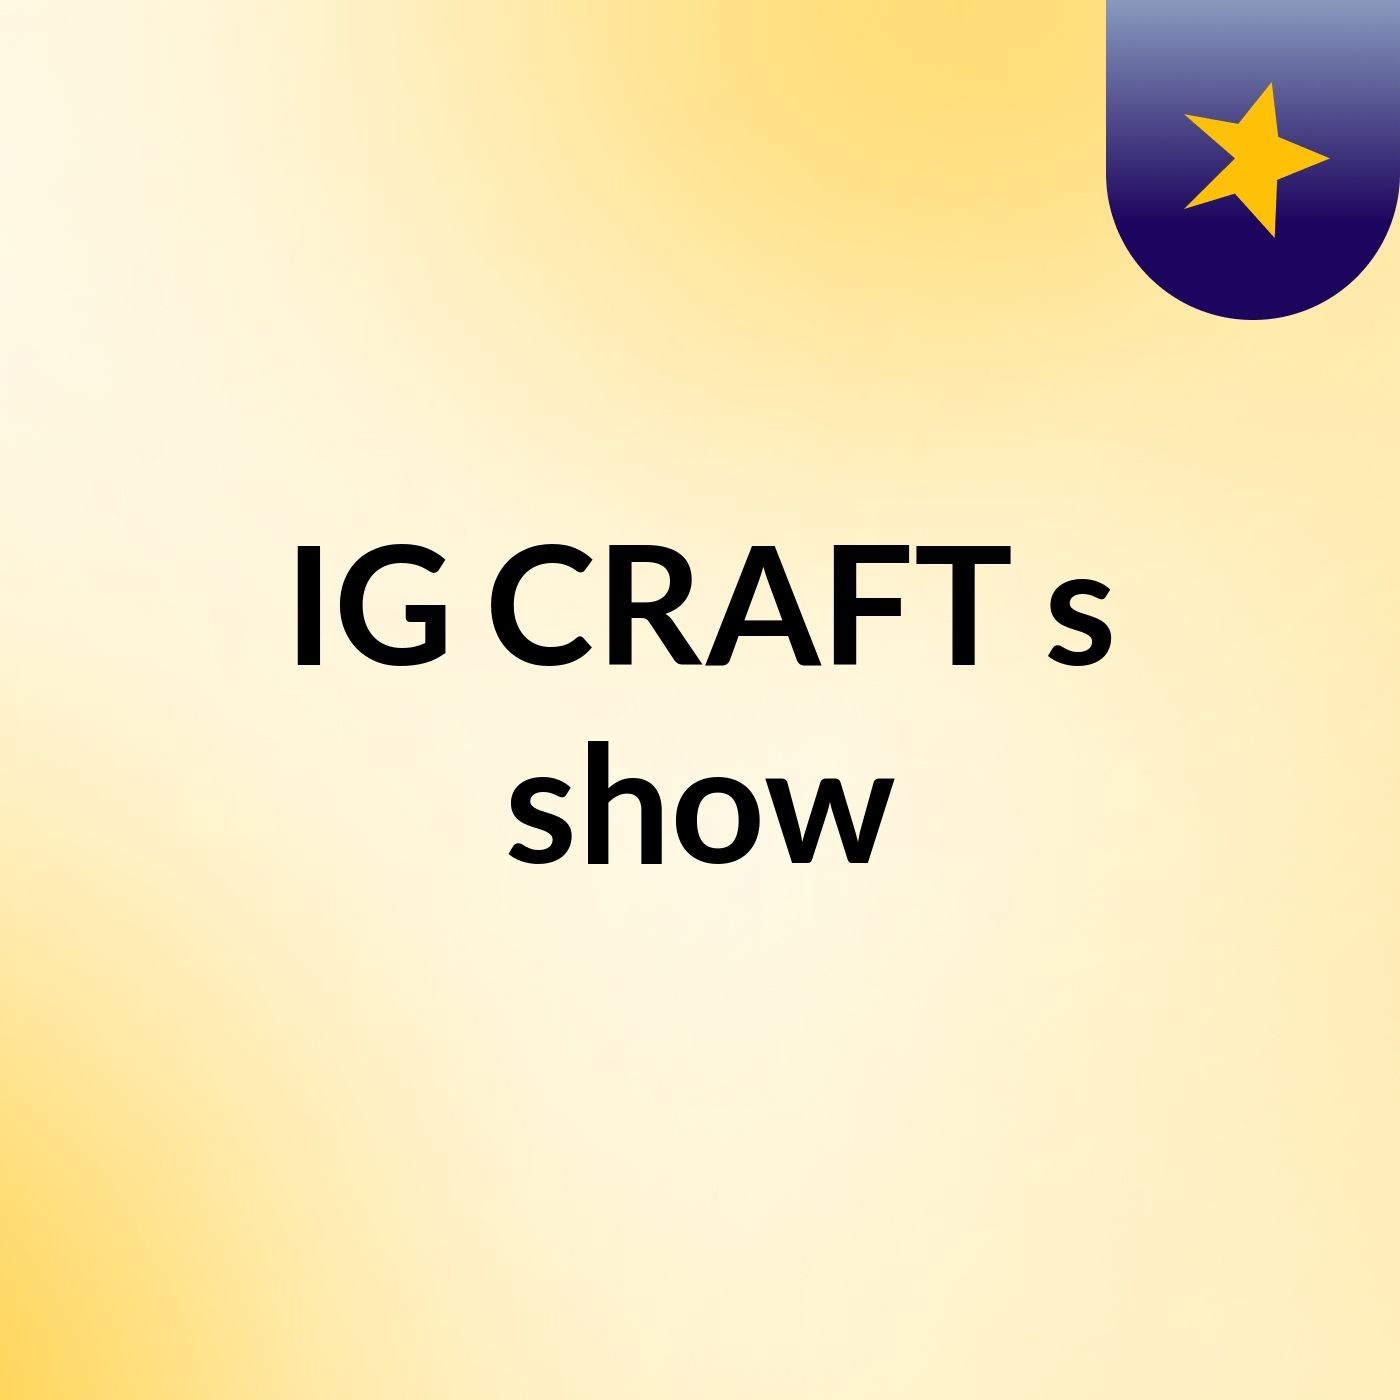 IG CRAFT's show